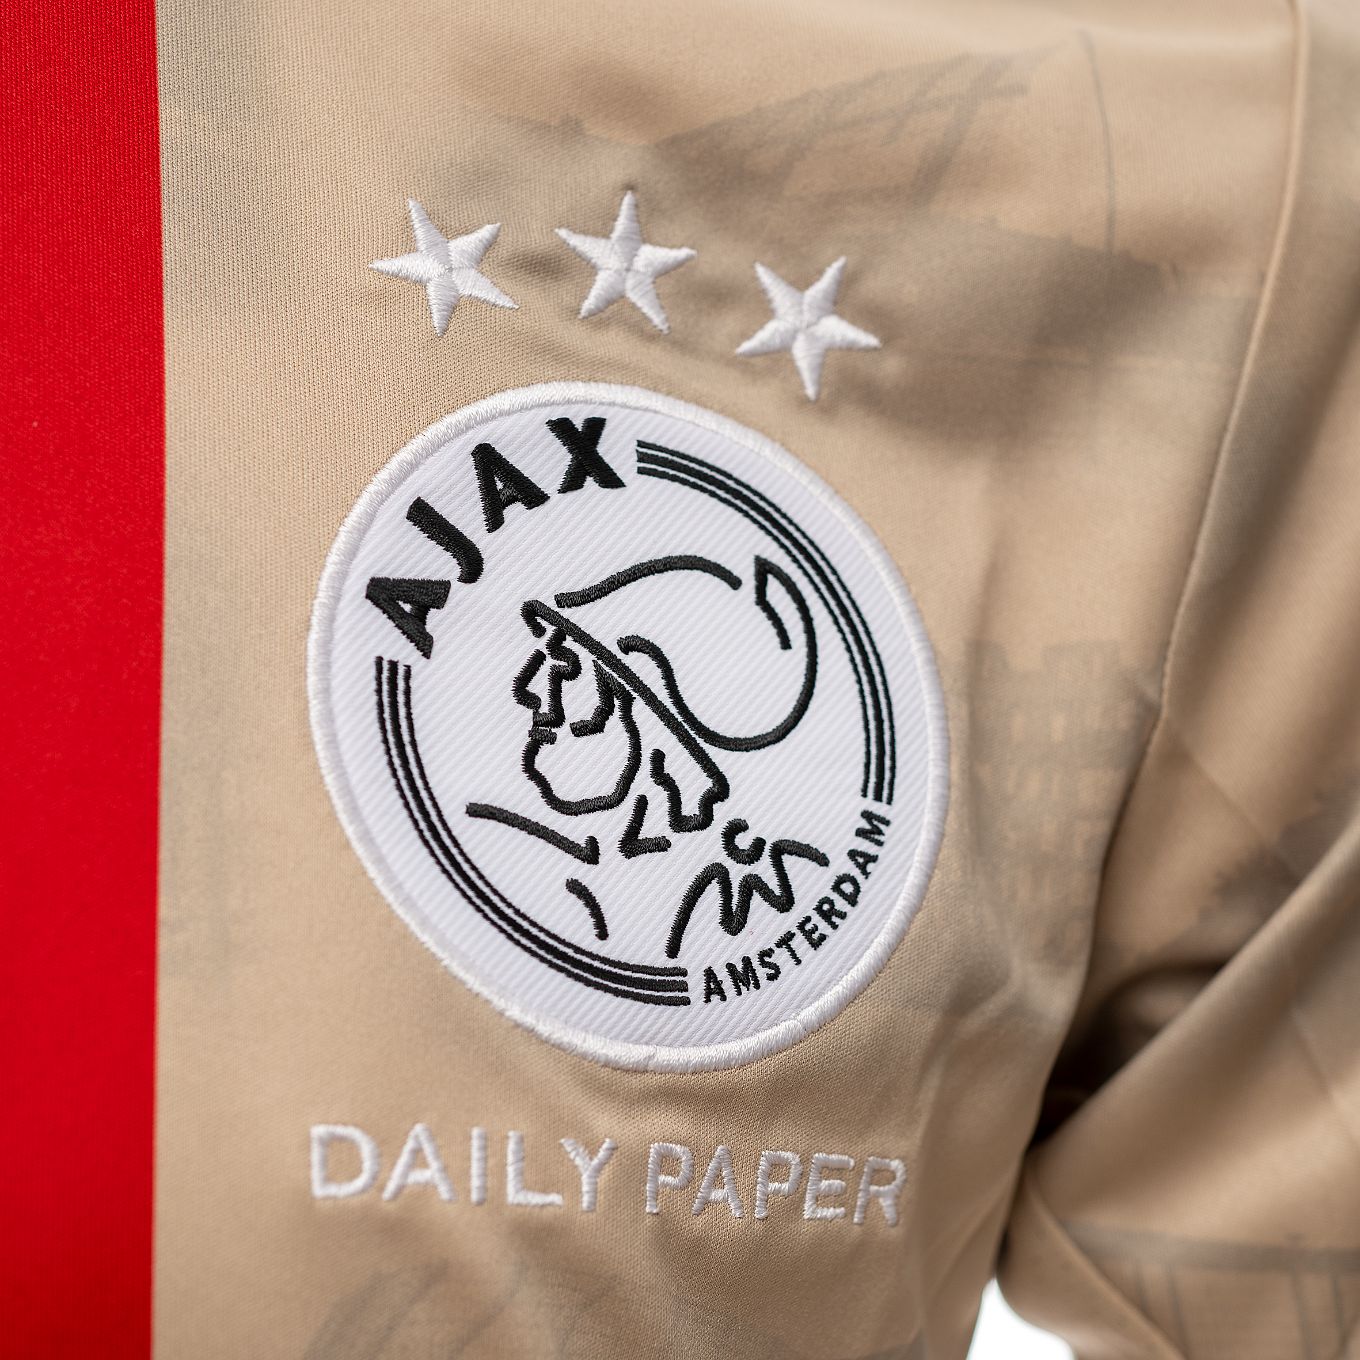 Nouri Ajax Dailypaper Ajax logo.jpg